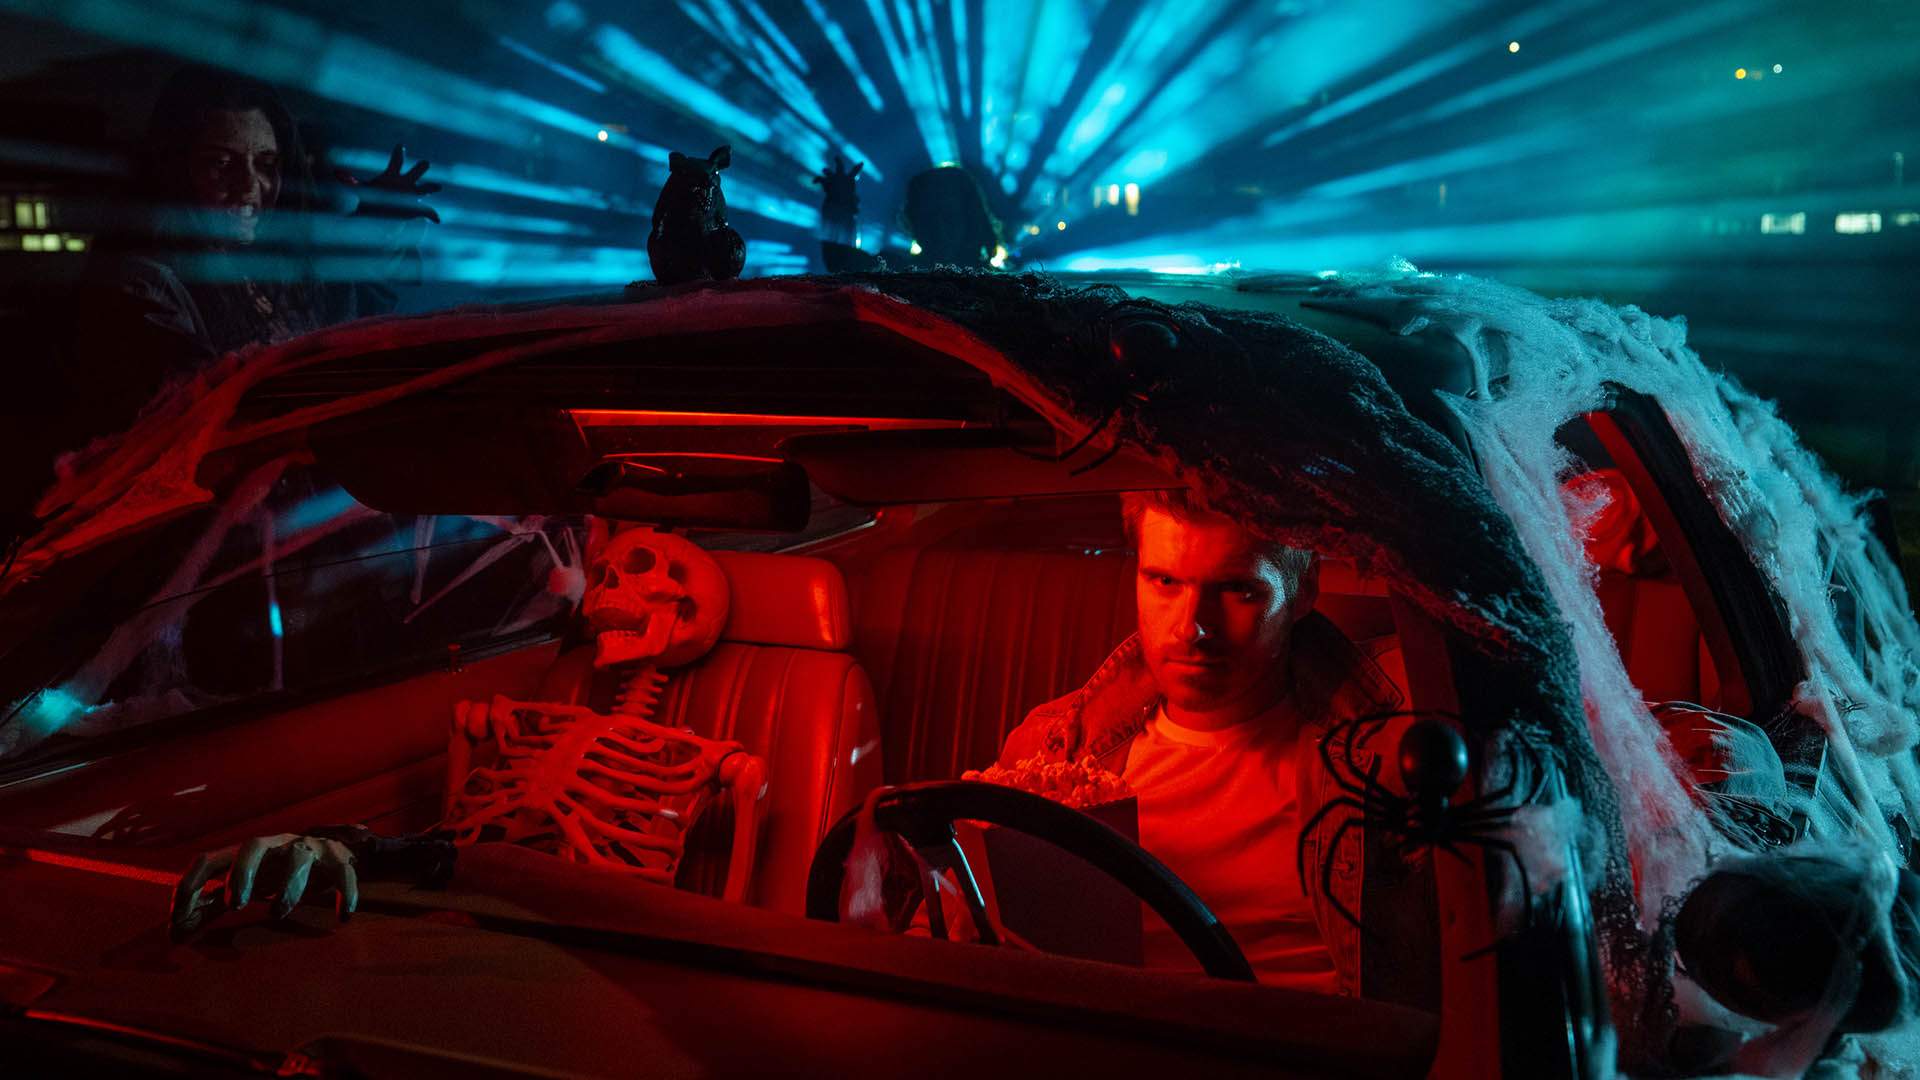 Frightful 80s Drive-In Cinema